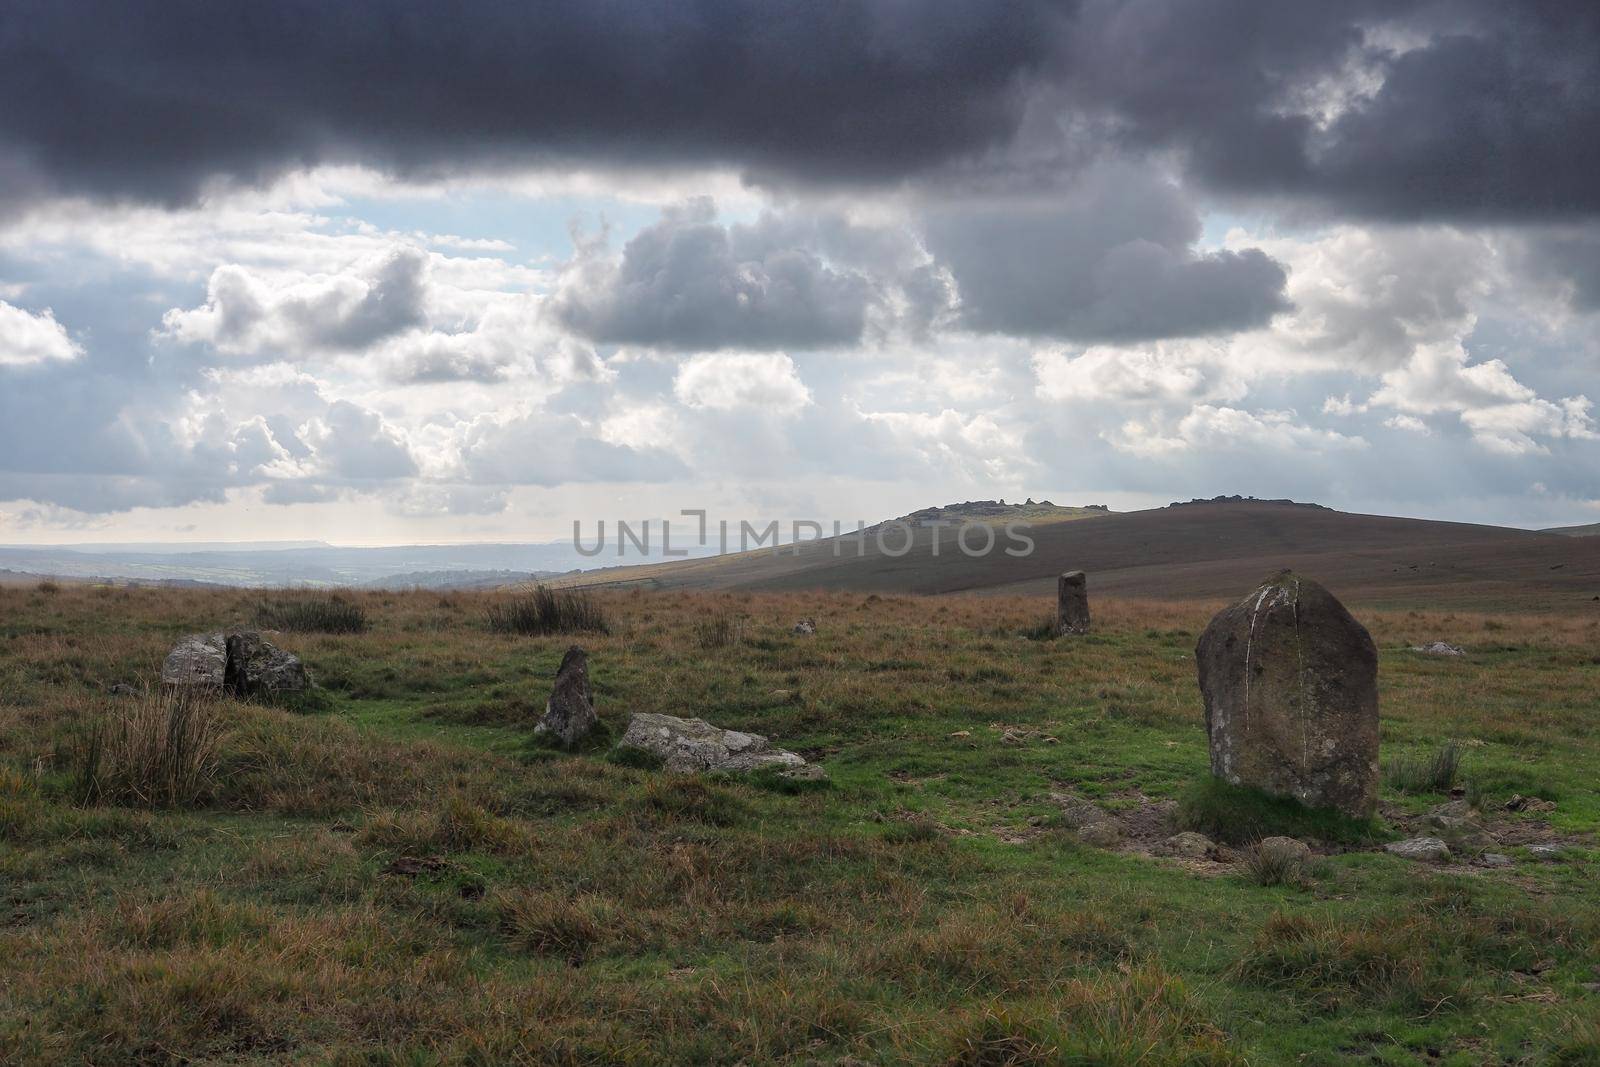 Ancient stone circle under Great Staple Tor with dark cloudy sky overhead, Dartmoor National Park, Devon, UK